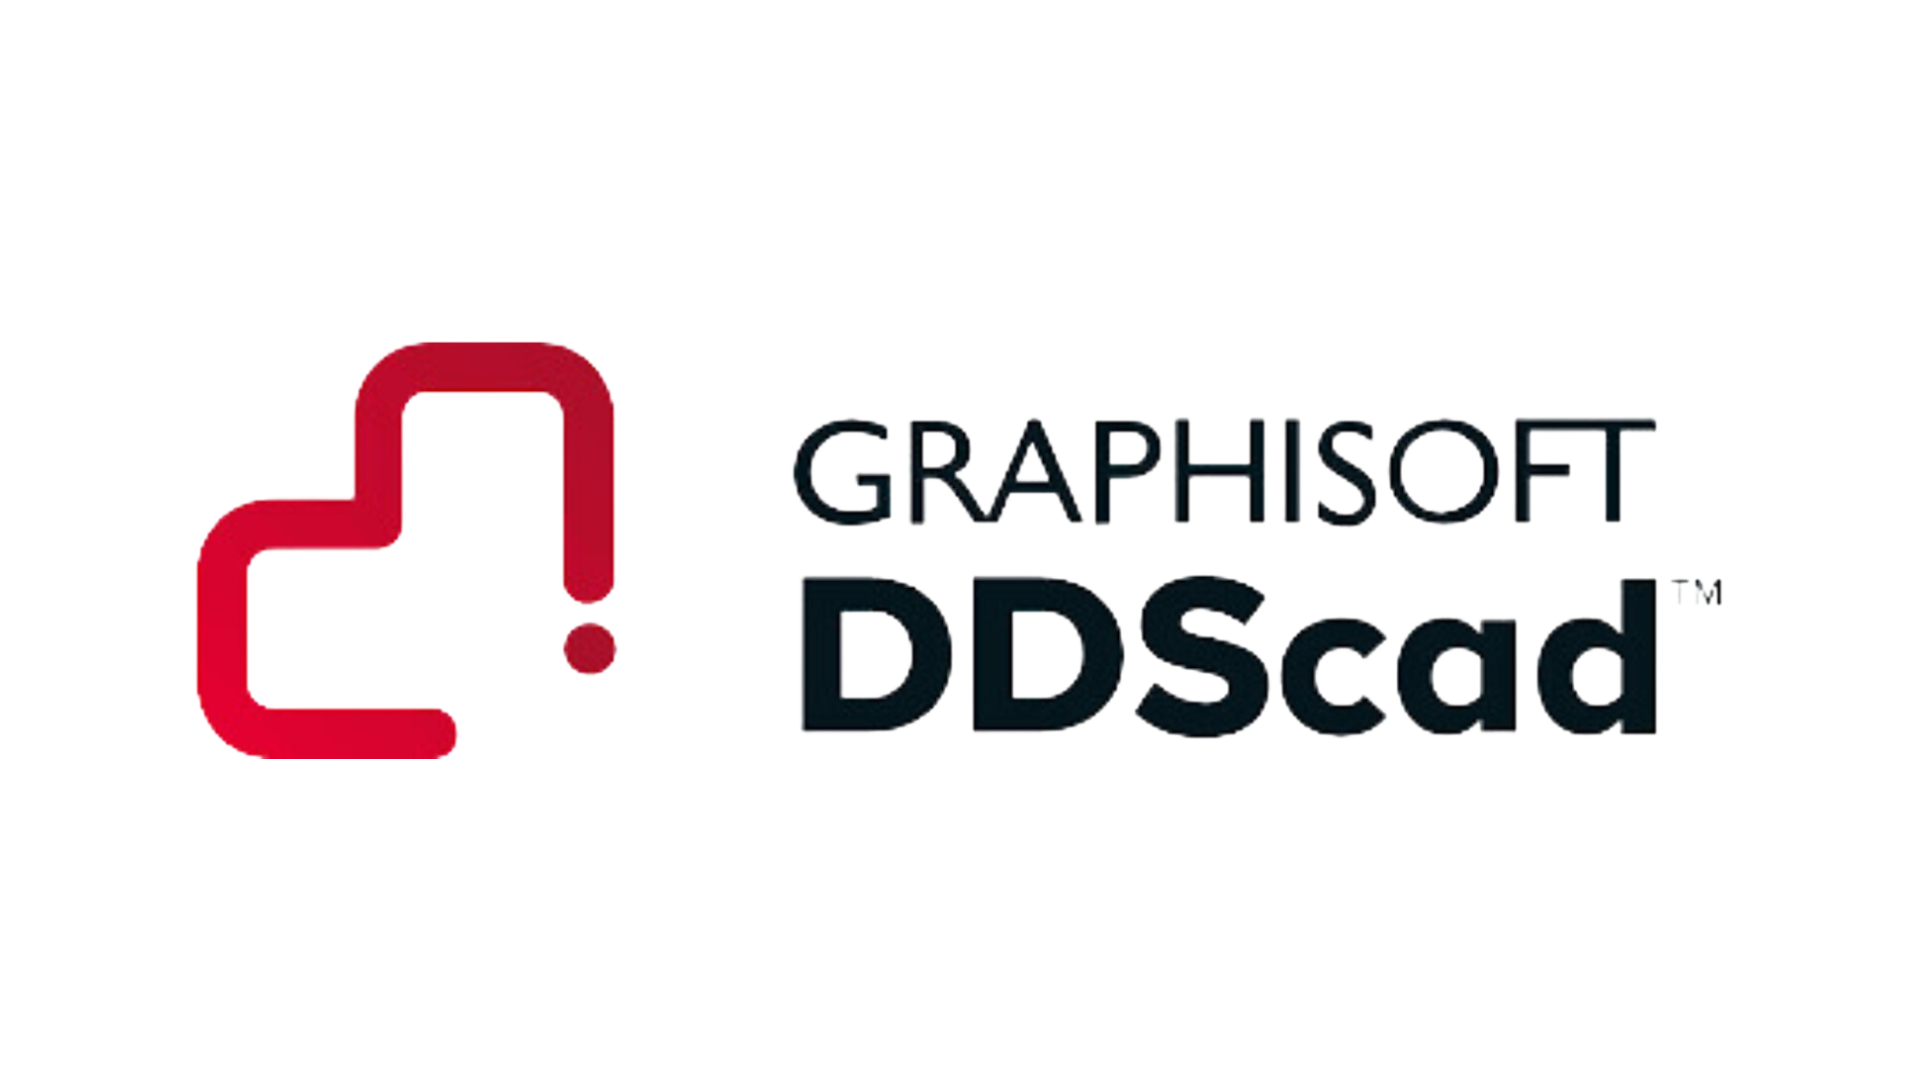 Graphisoft DDScad